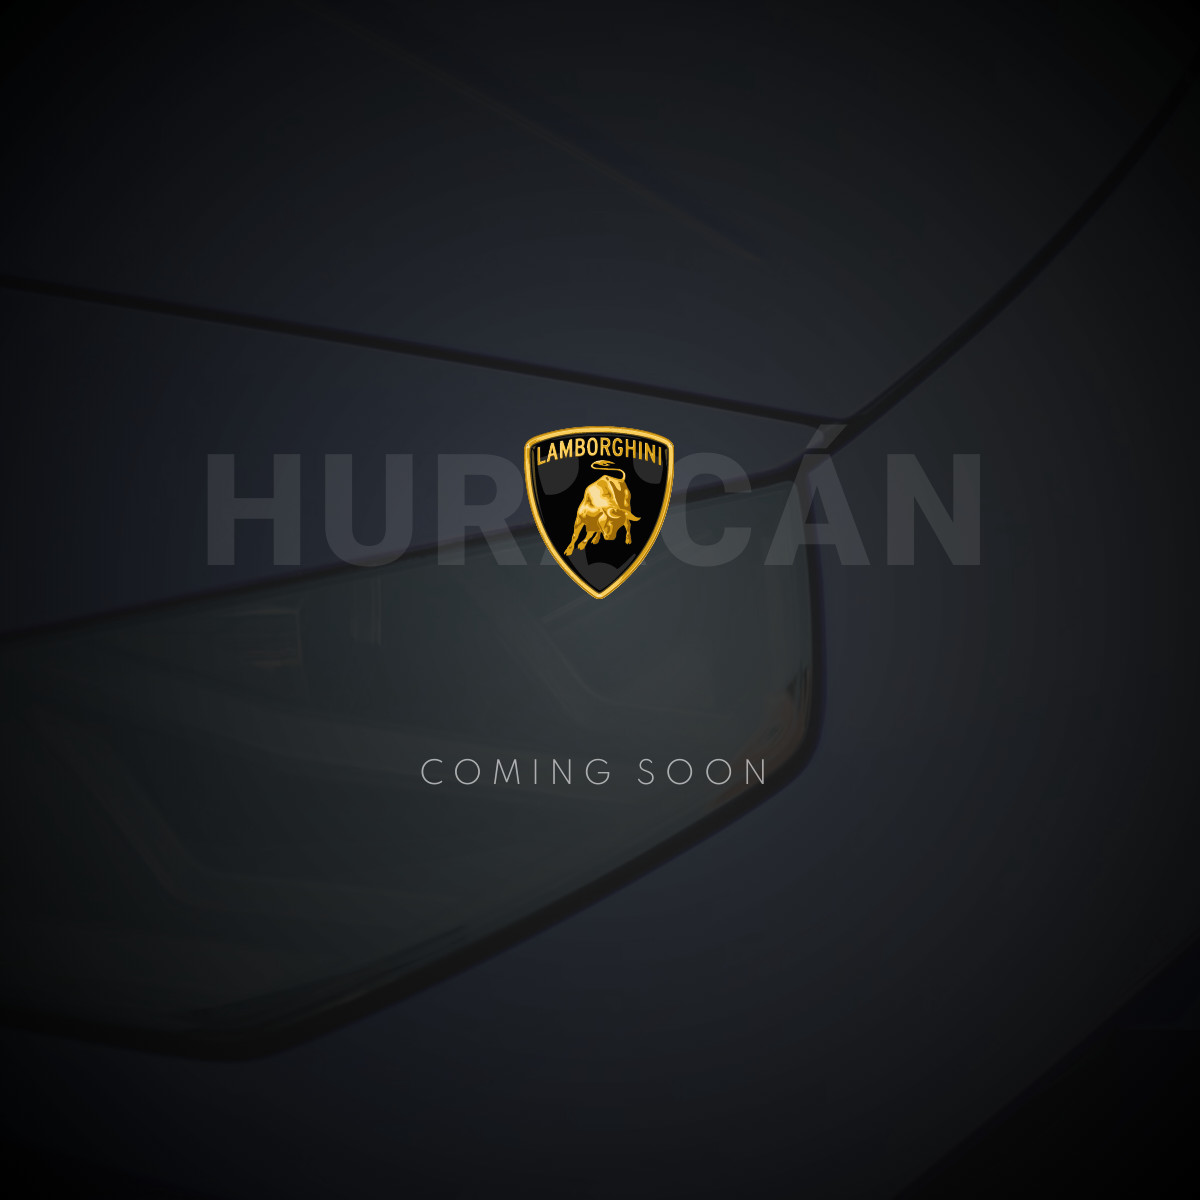 Lamborghini Huracan Coming Soon Video